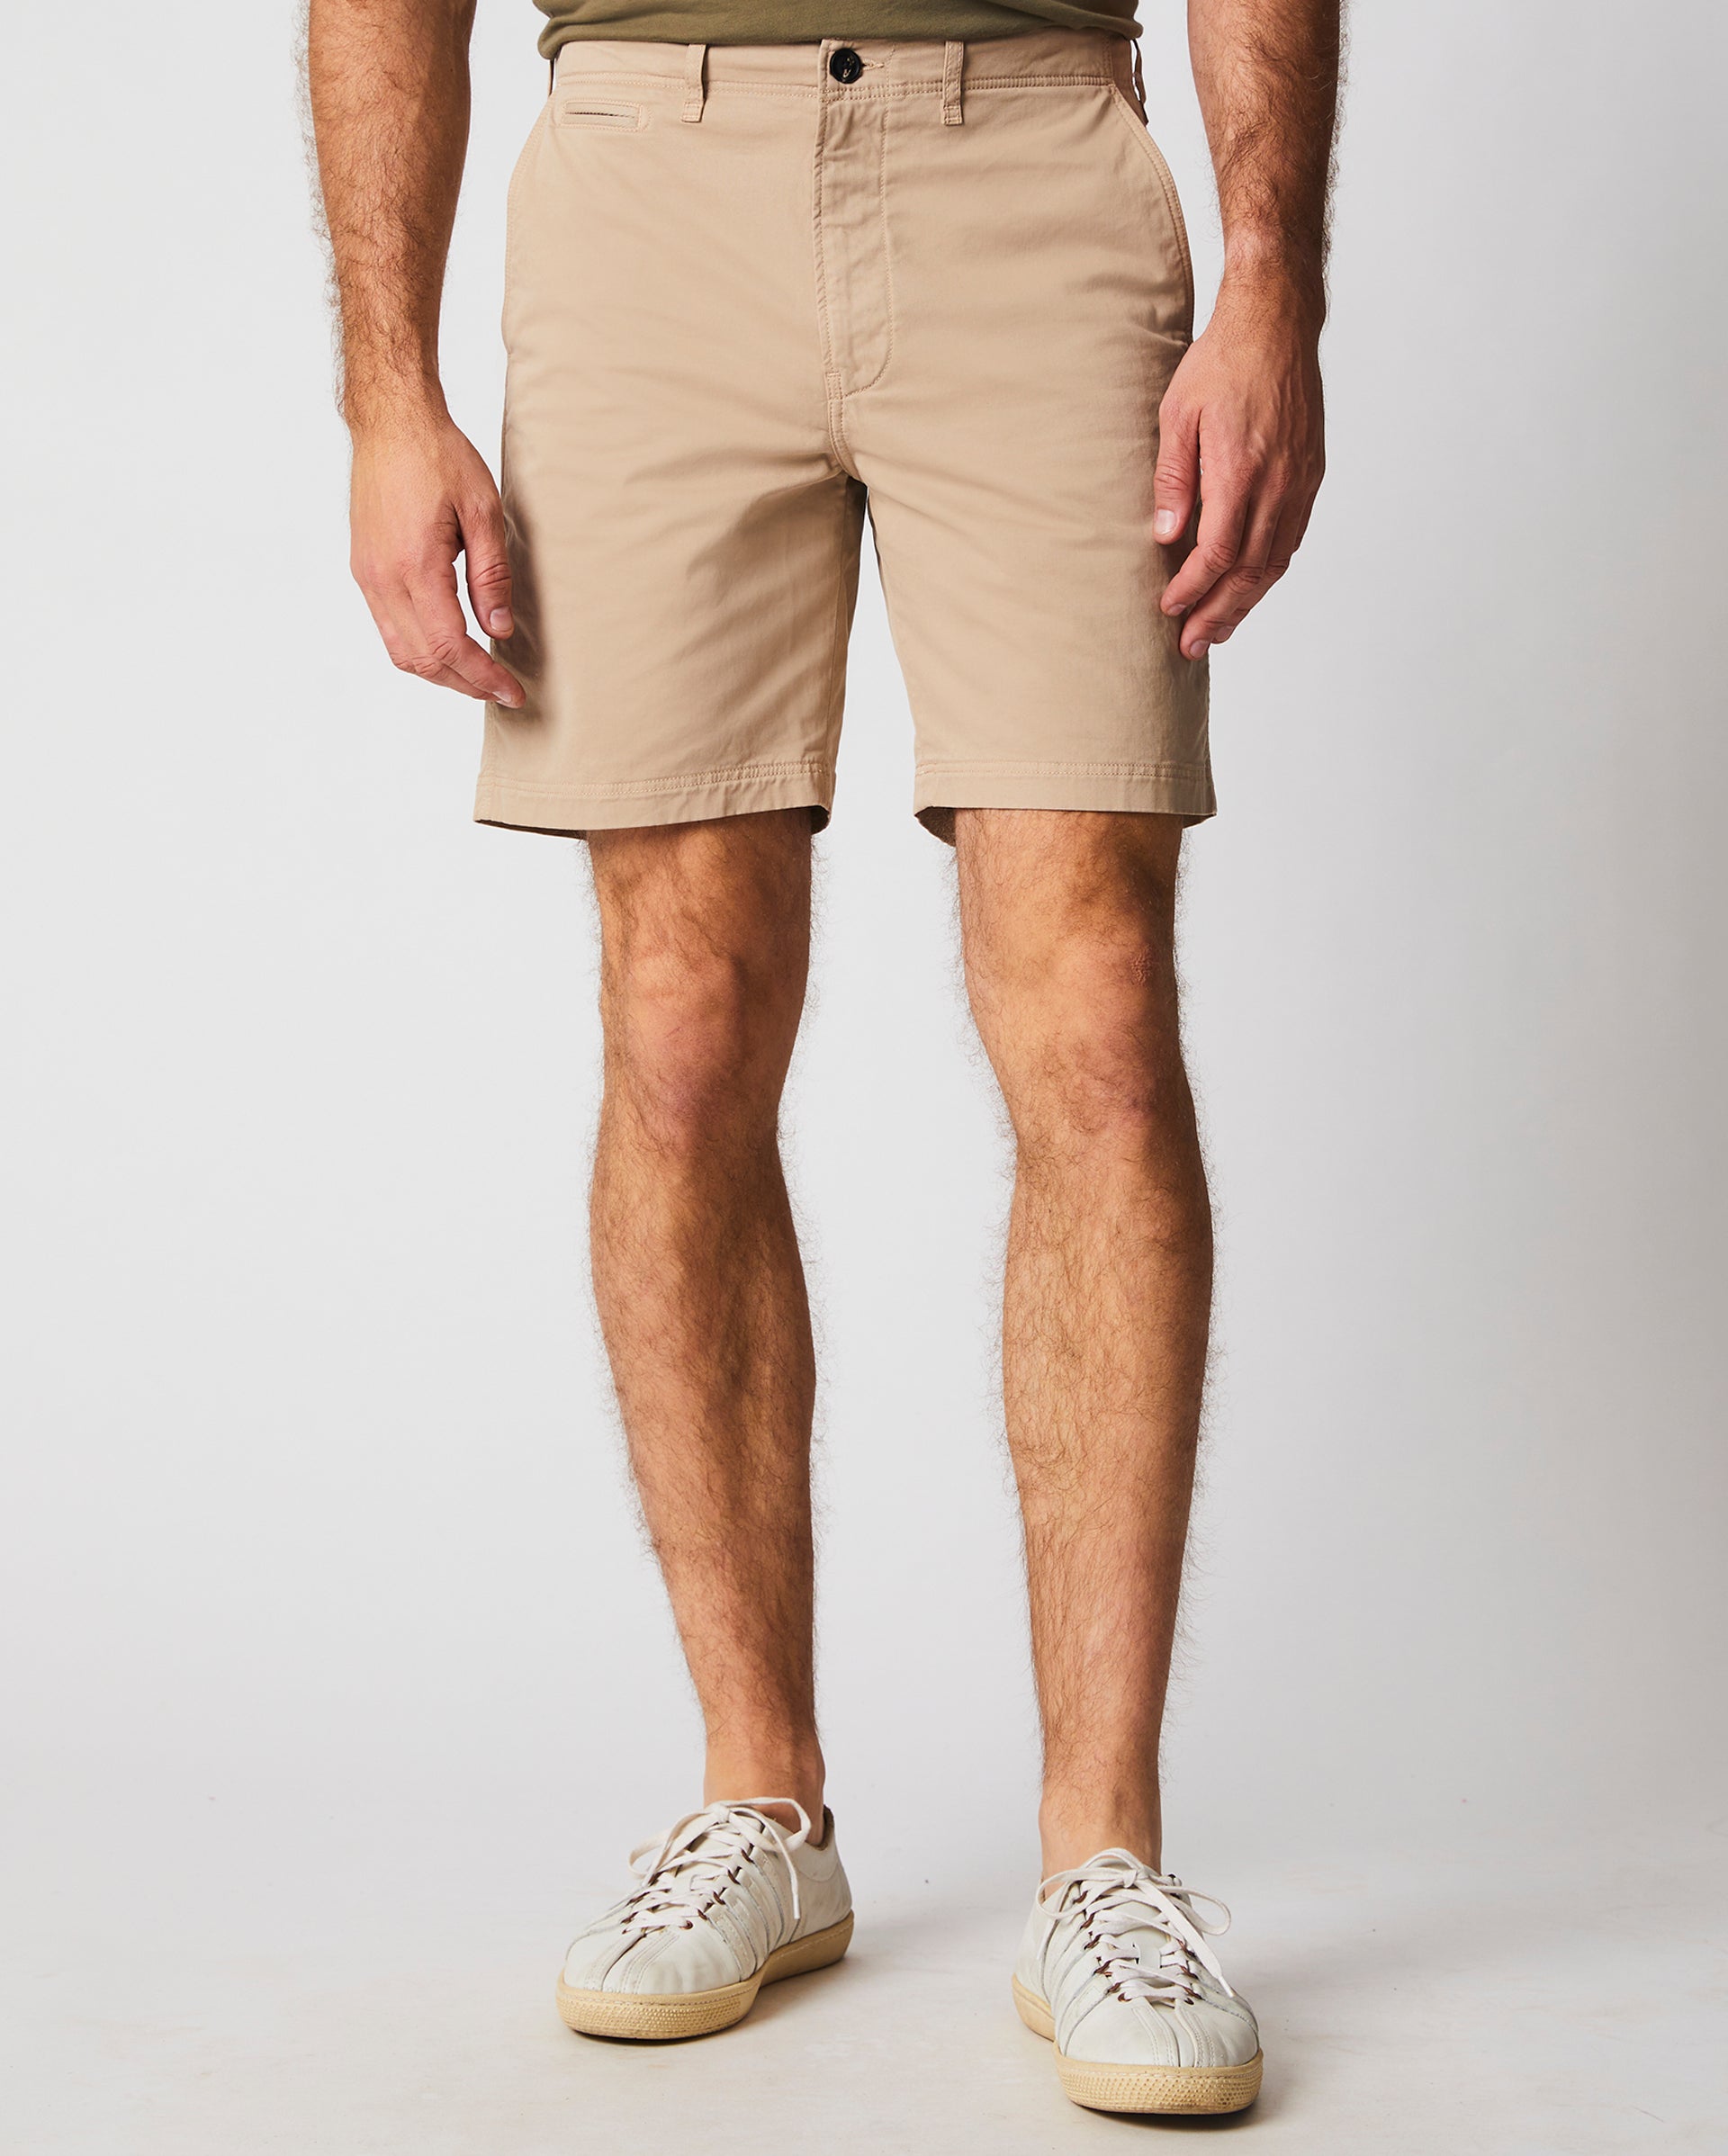 Men's Cargo Board Short - Khaki, Size 32 | Wet Effect